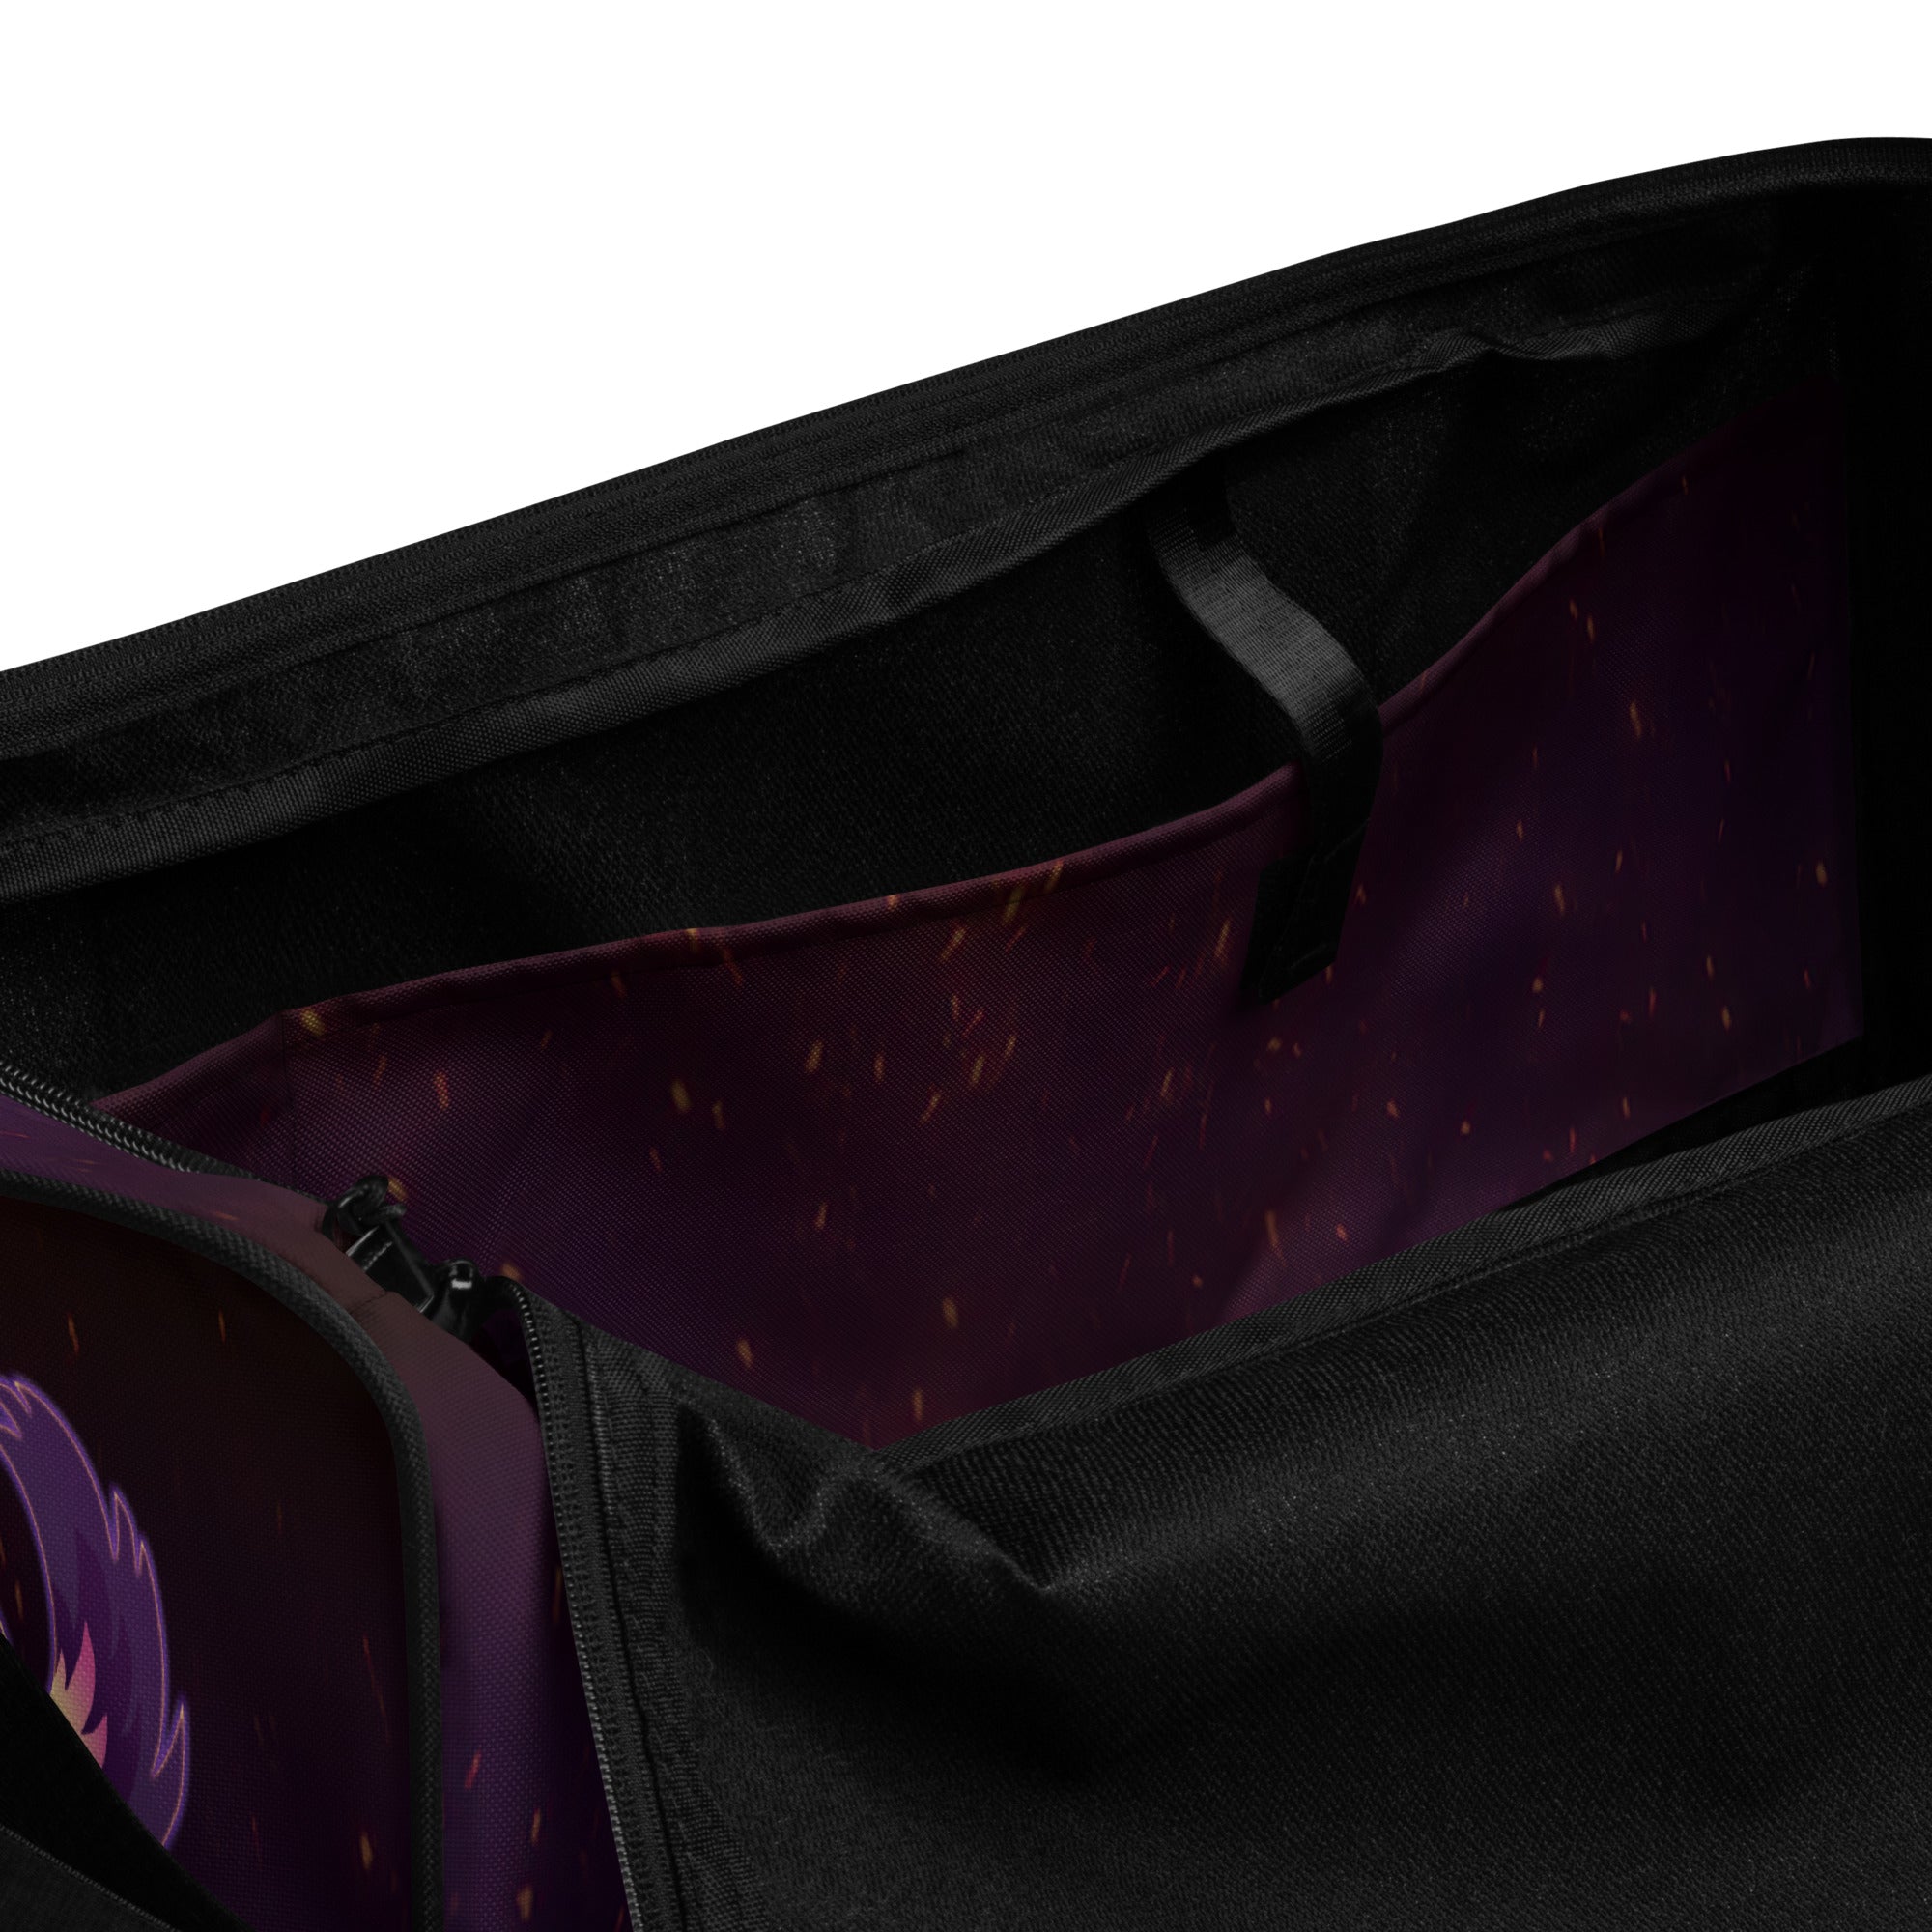 Purple Phoenix Duffle bag